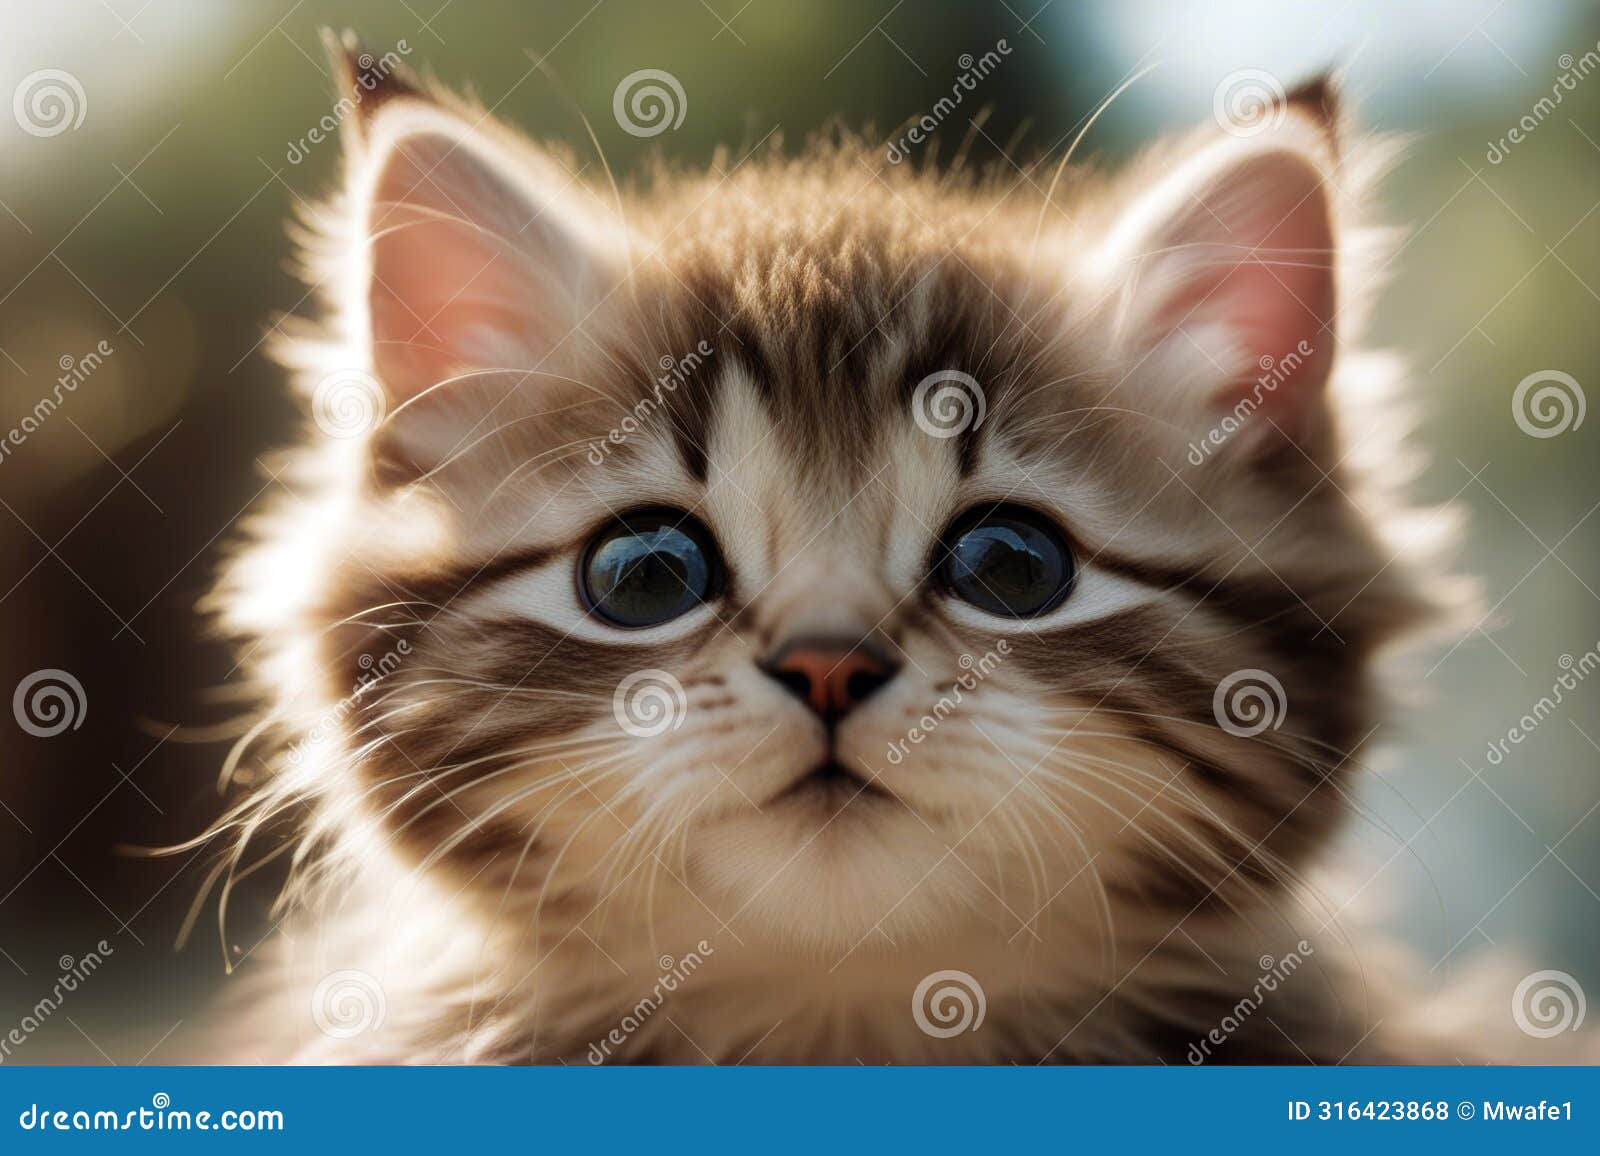 funny kitten lovable pretty cat felino pedigreed short hair cuddly expression cute household pedigree vet adorable pet beautiful